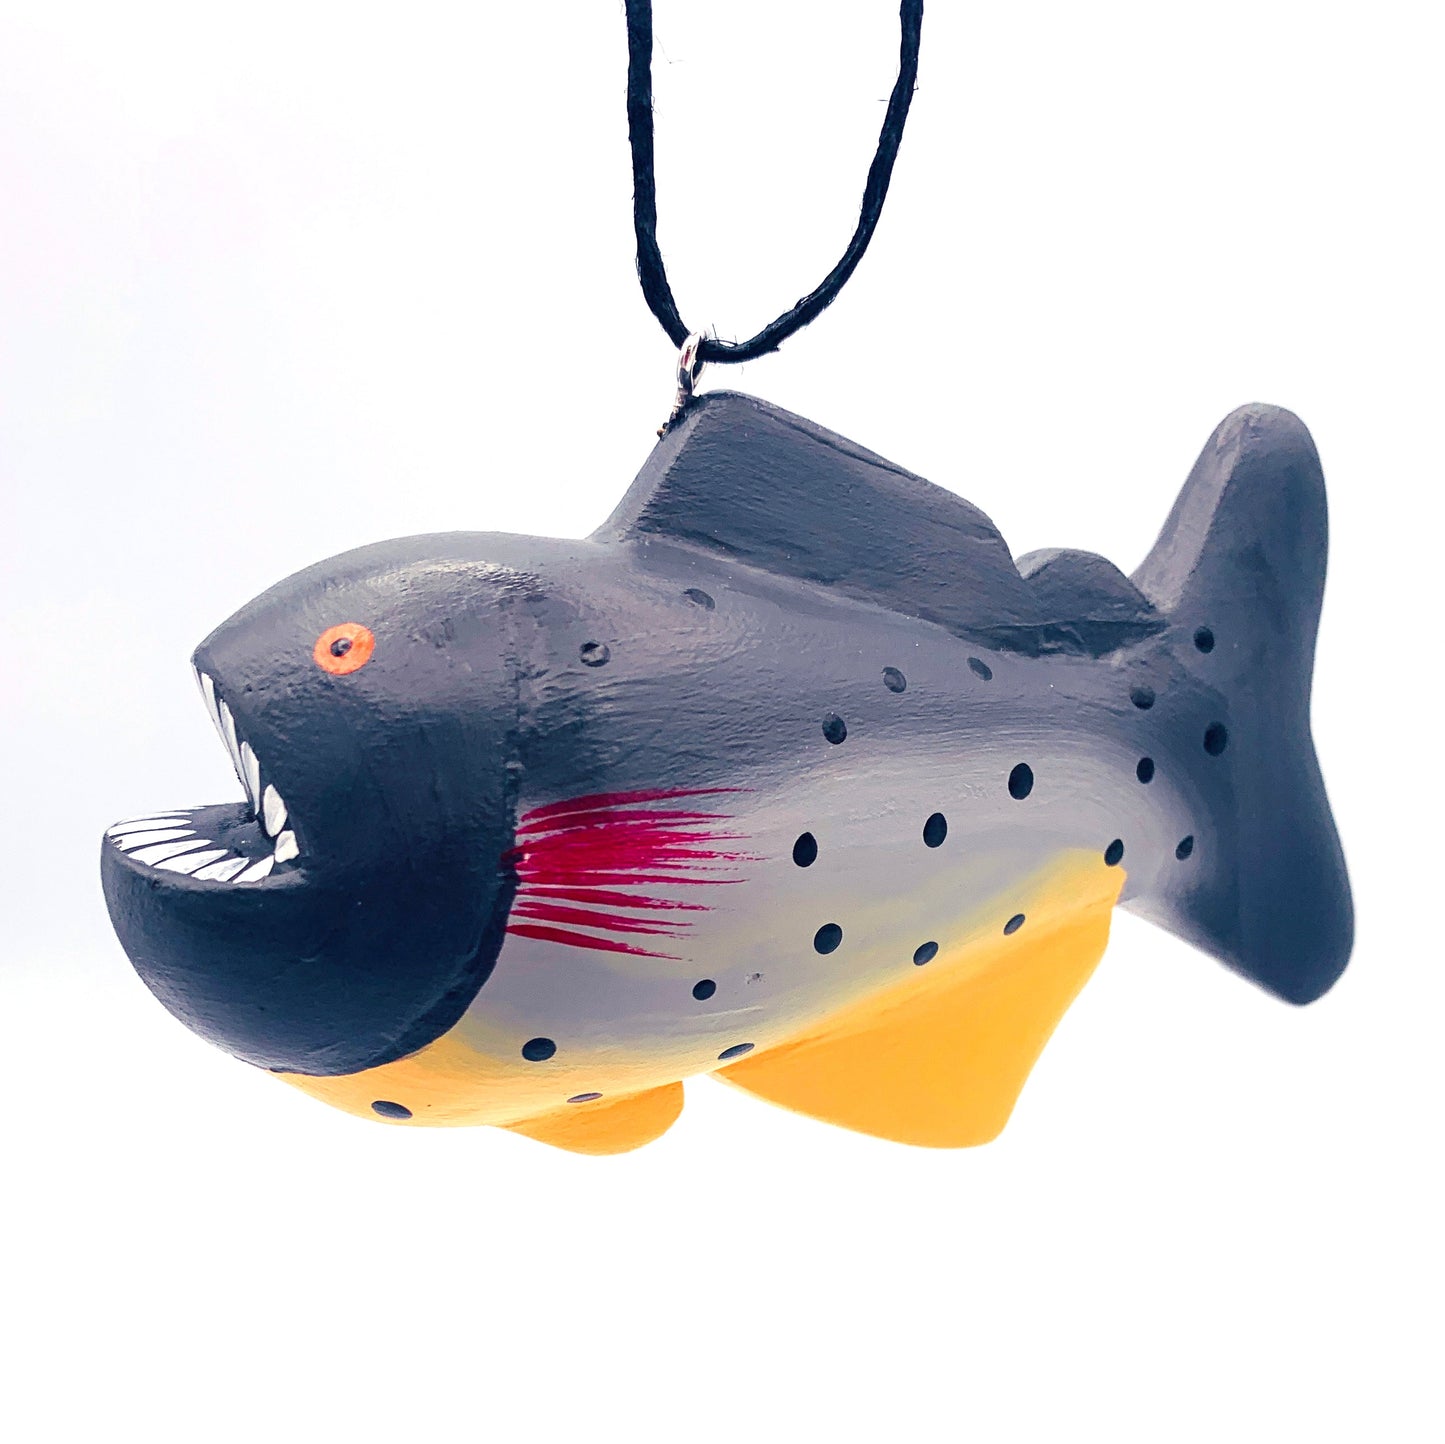 Piranha Balsa Ornament